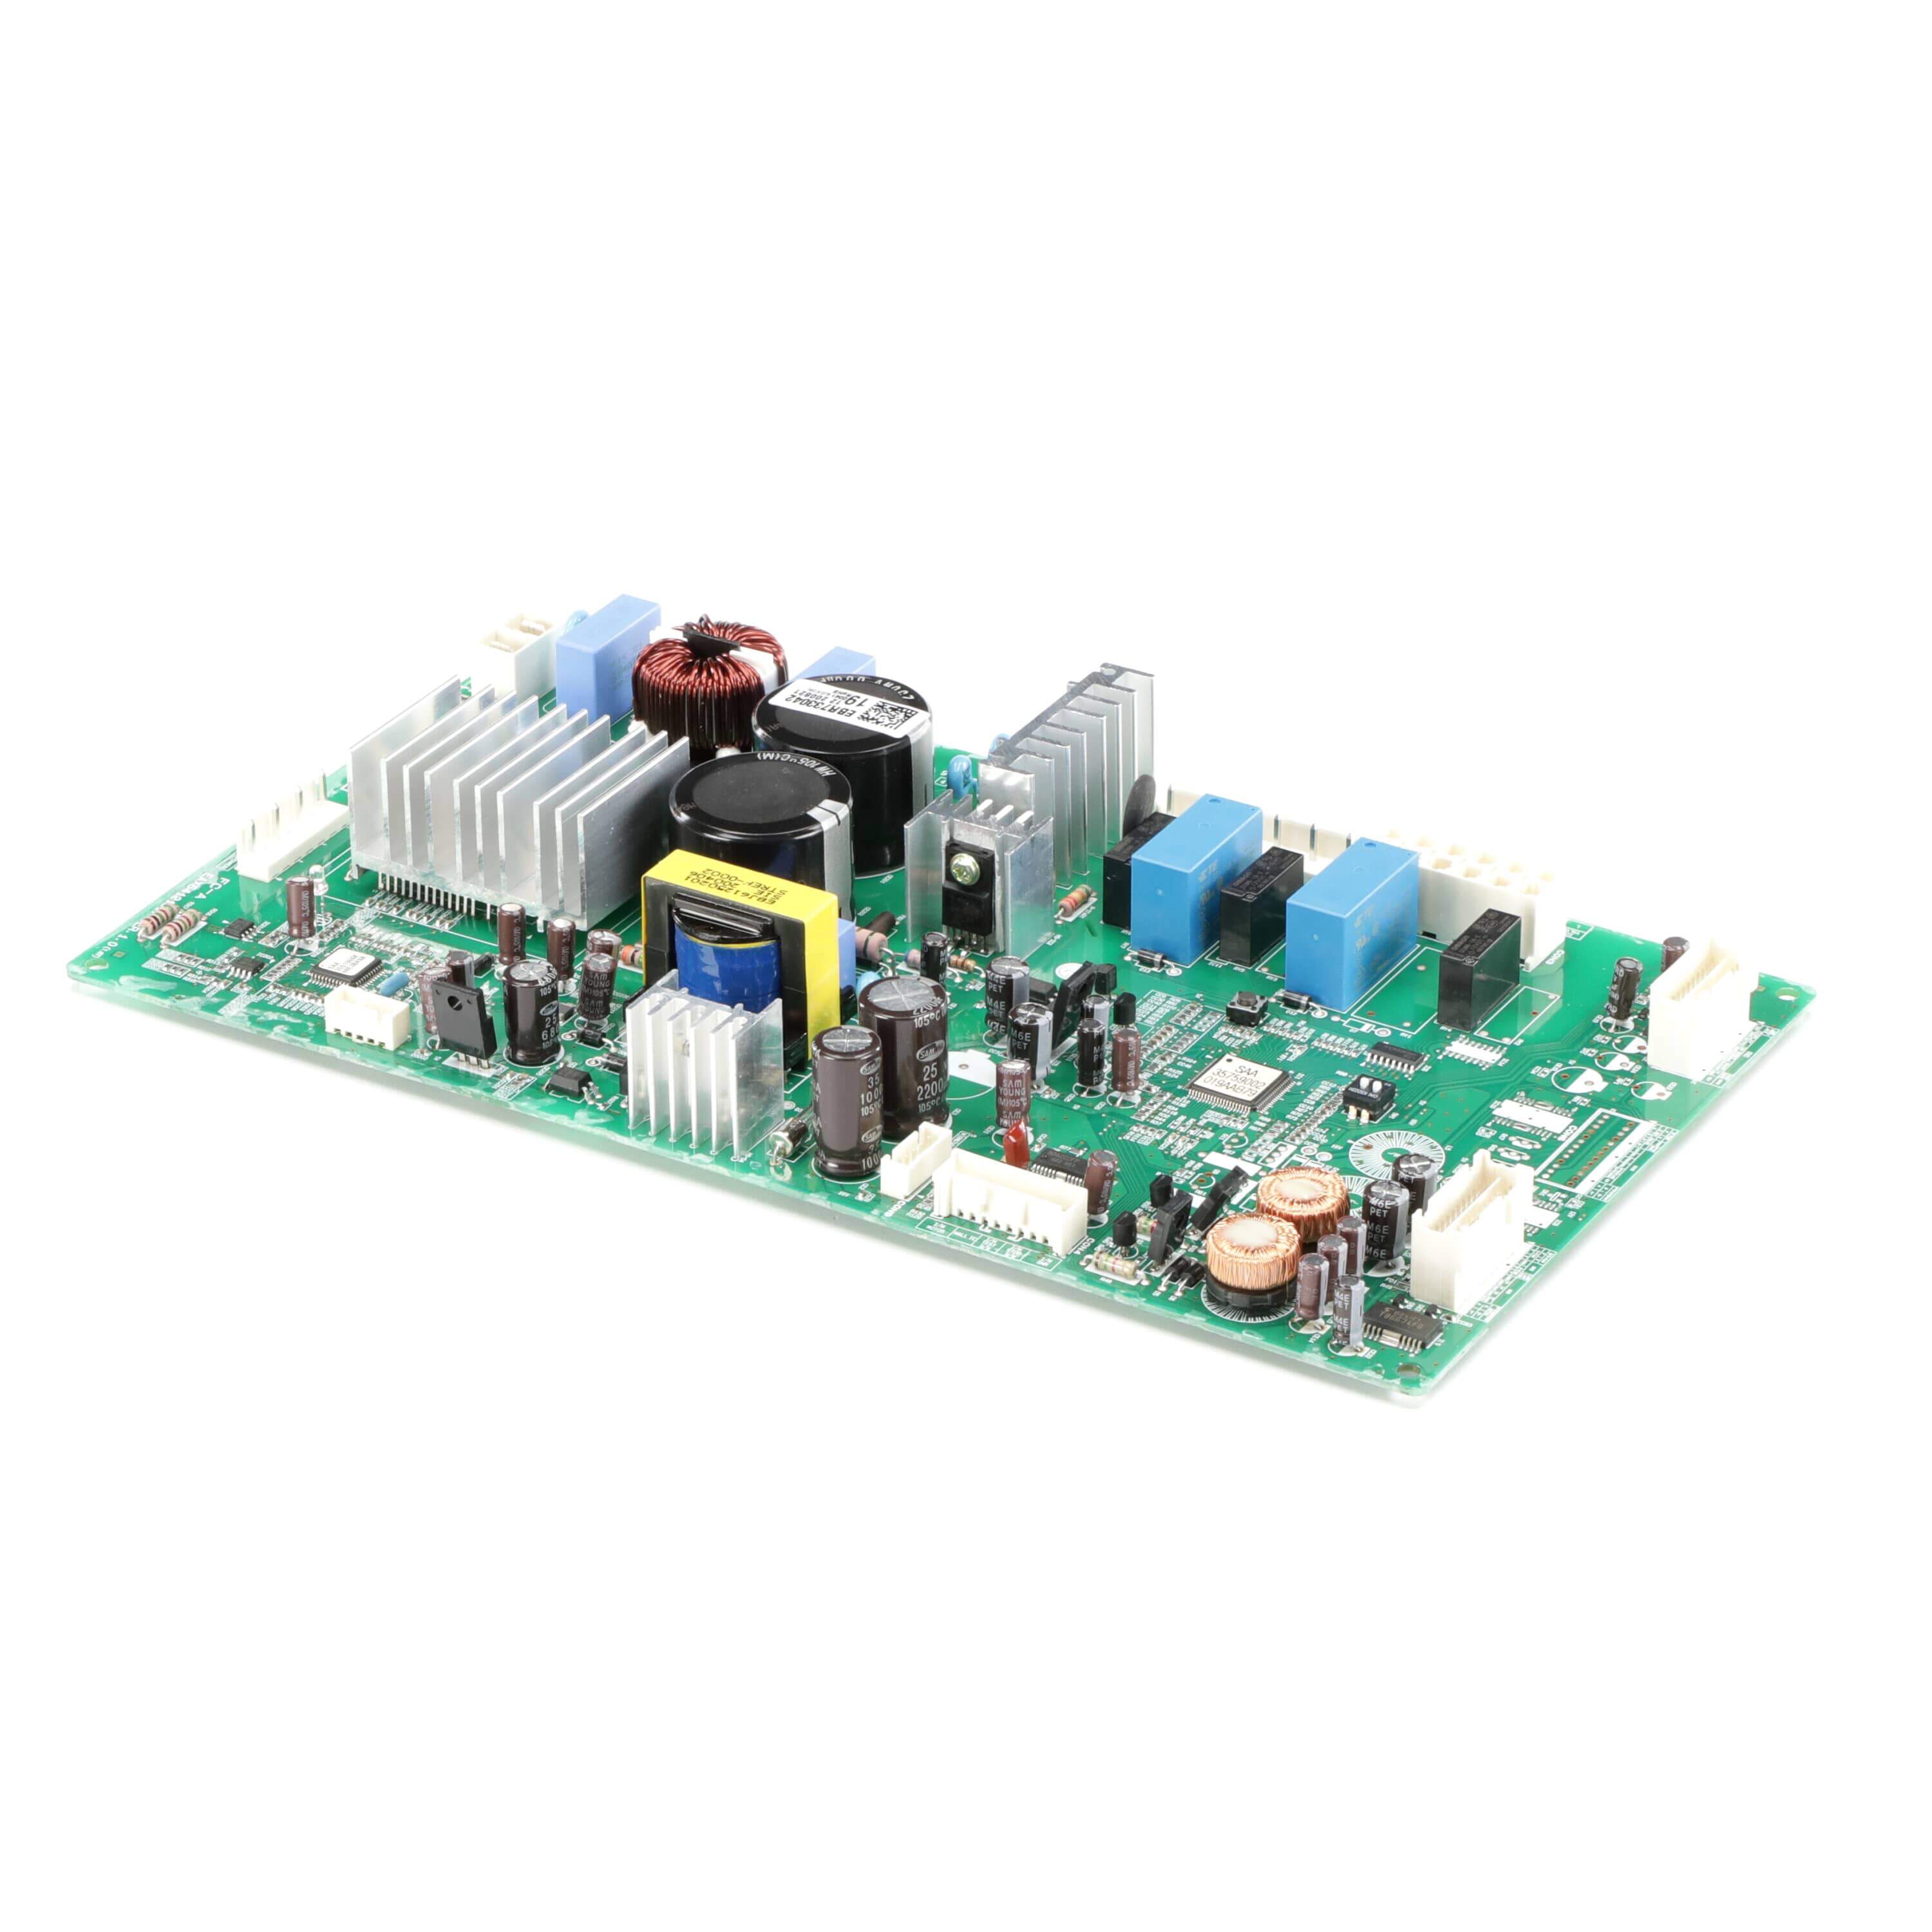 LG EBR73304219 Main PCB Assembly